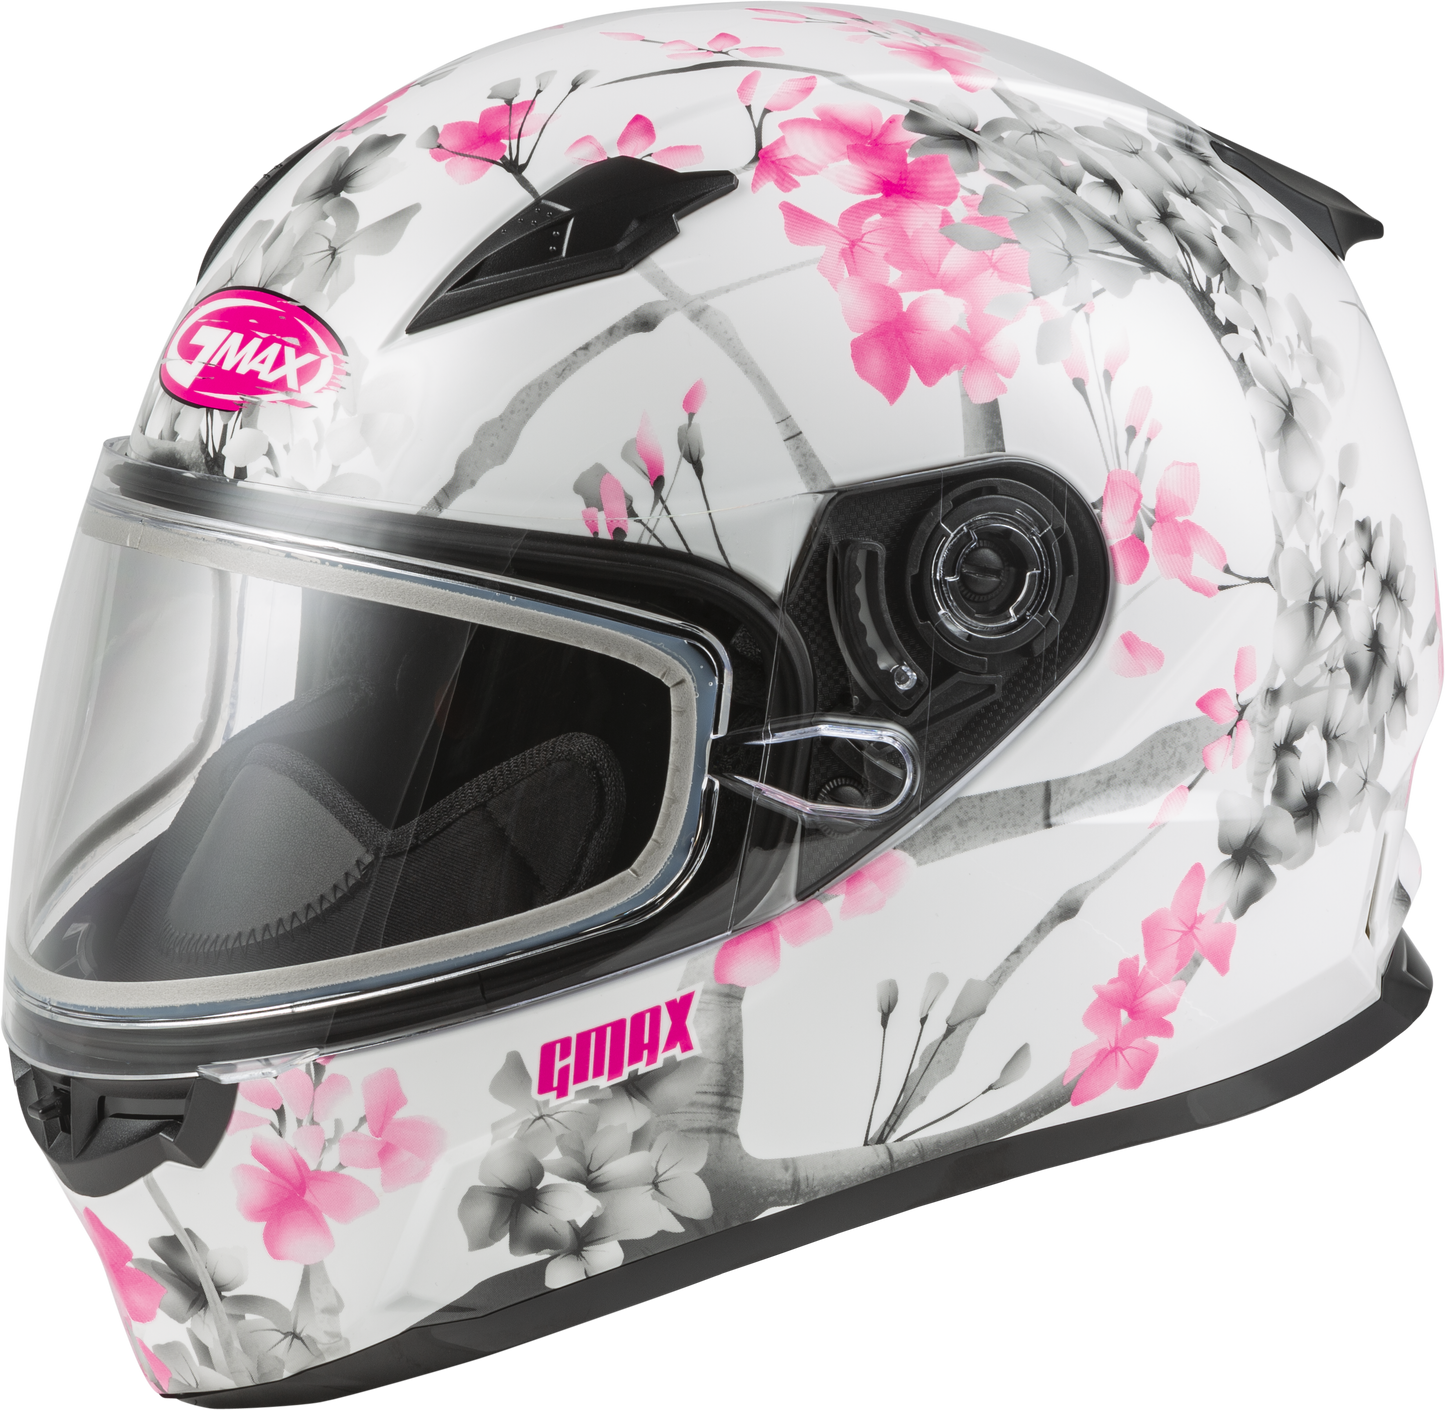 Gmax 72-6340 FF-49S 'Blossom' Full-Face Snow Helmet White/Pink/Grey